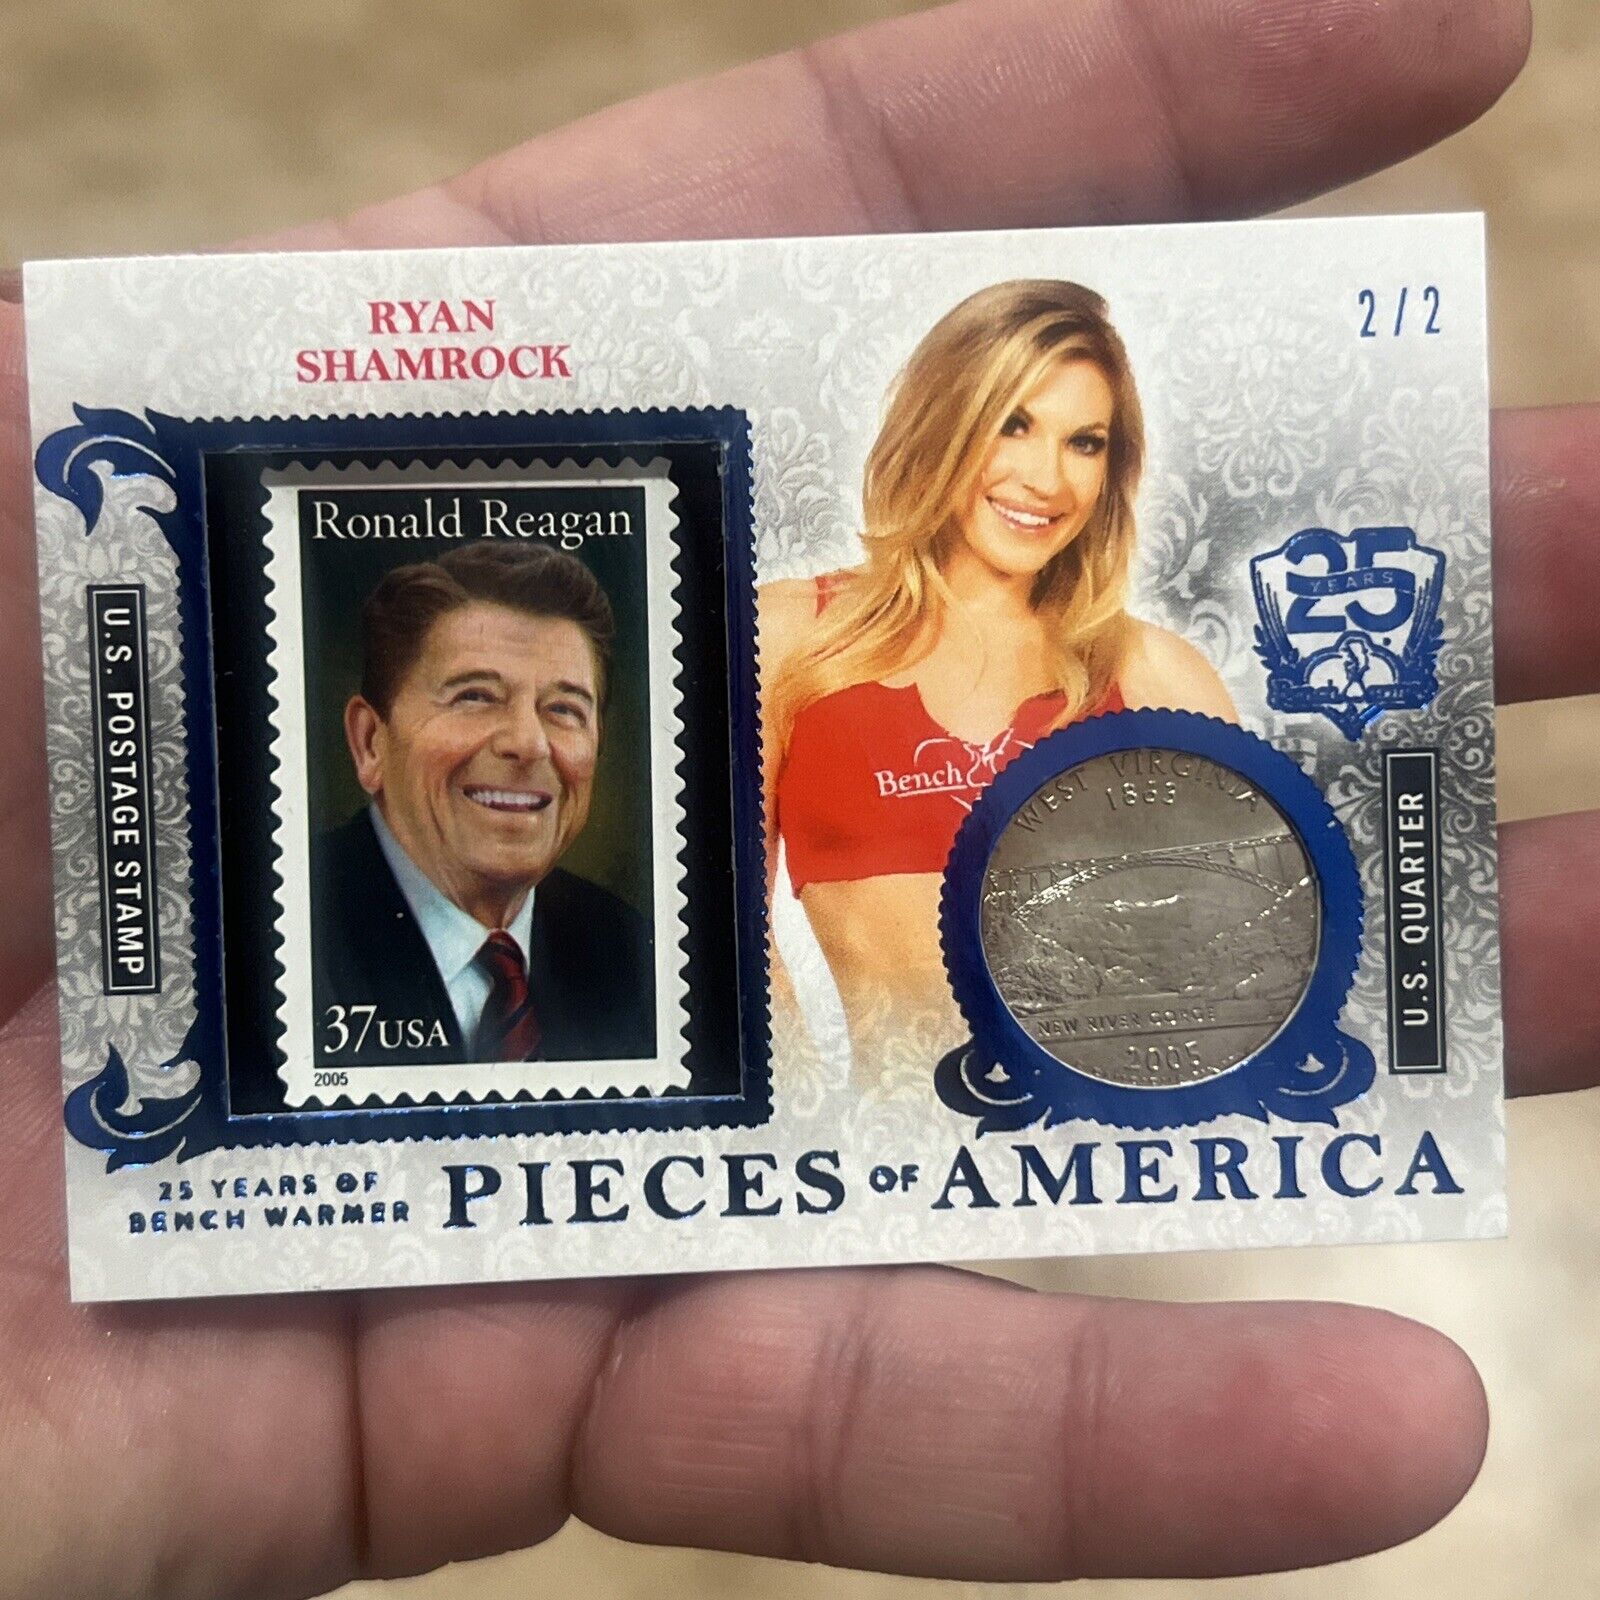 2019 Bench Warmer Pieces of America RYAN SHAMROCK US Postage Stamp & Quarter 2/2